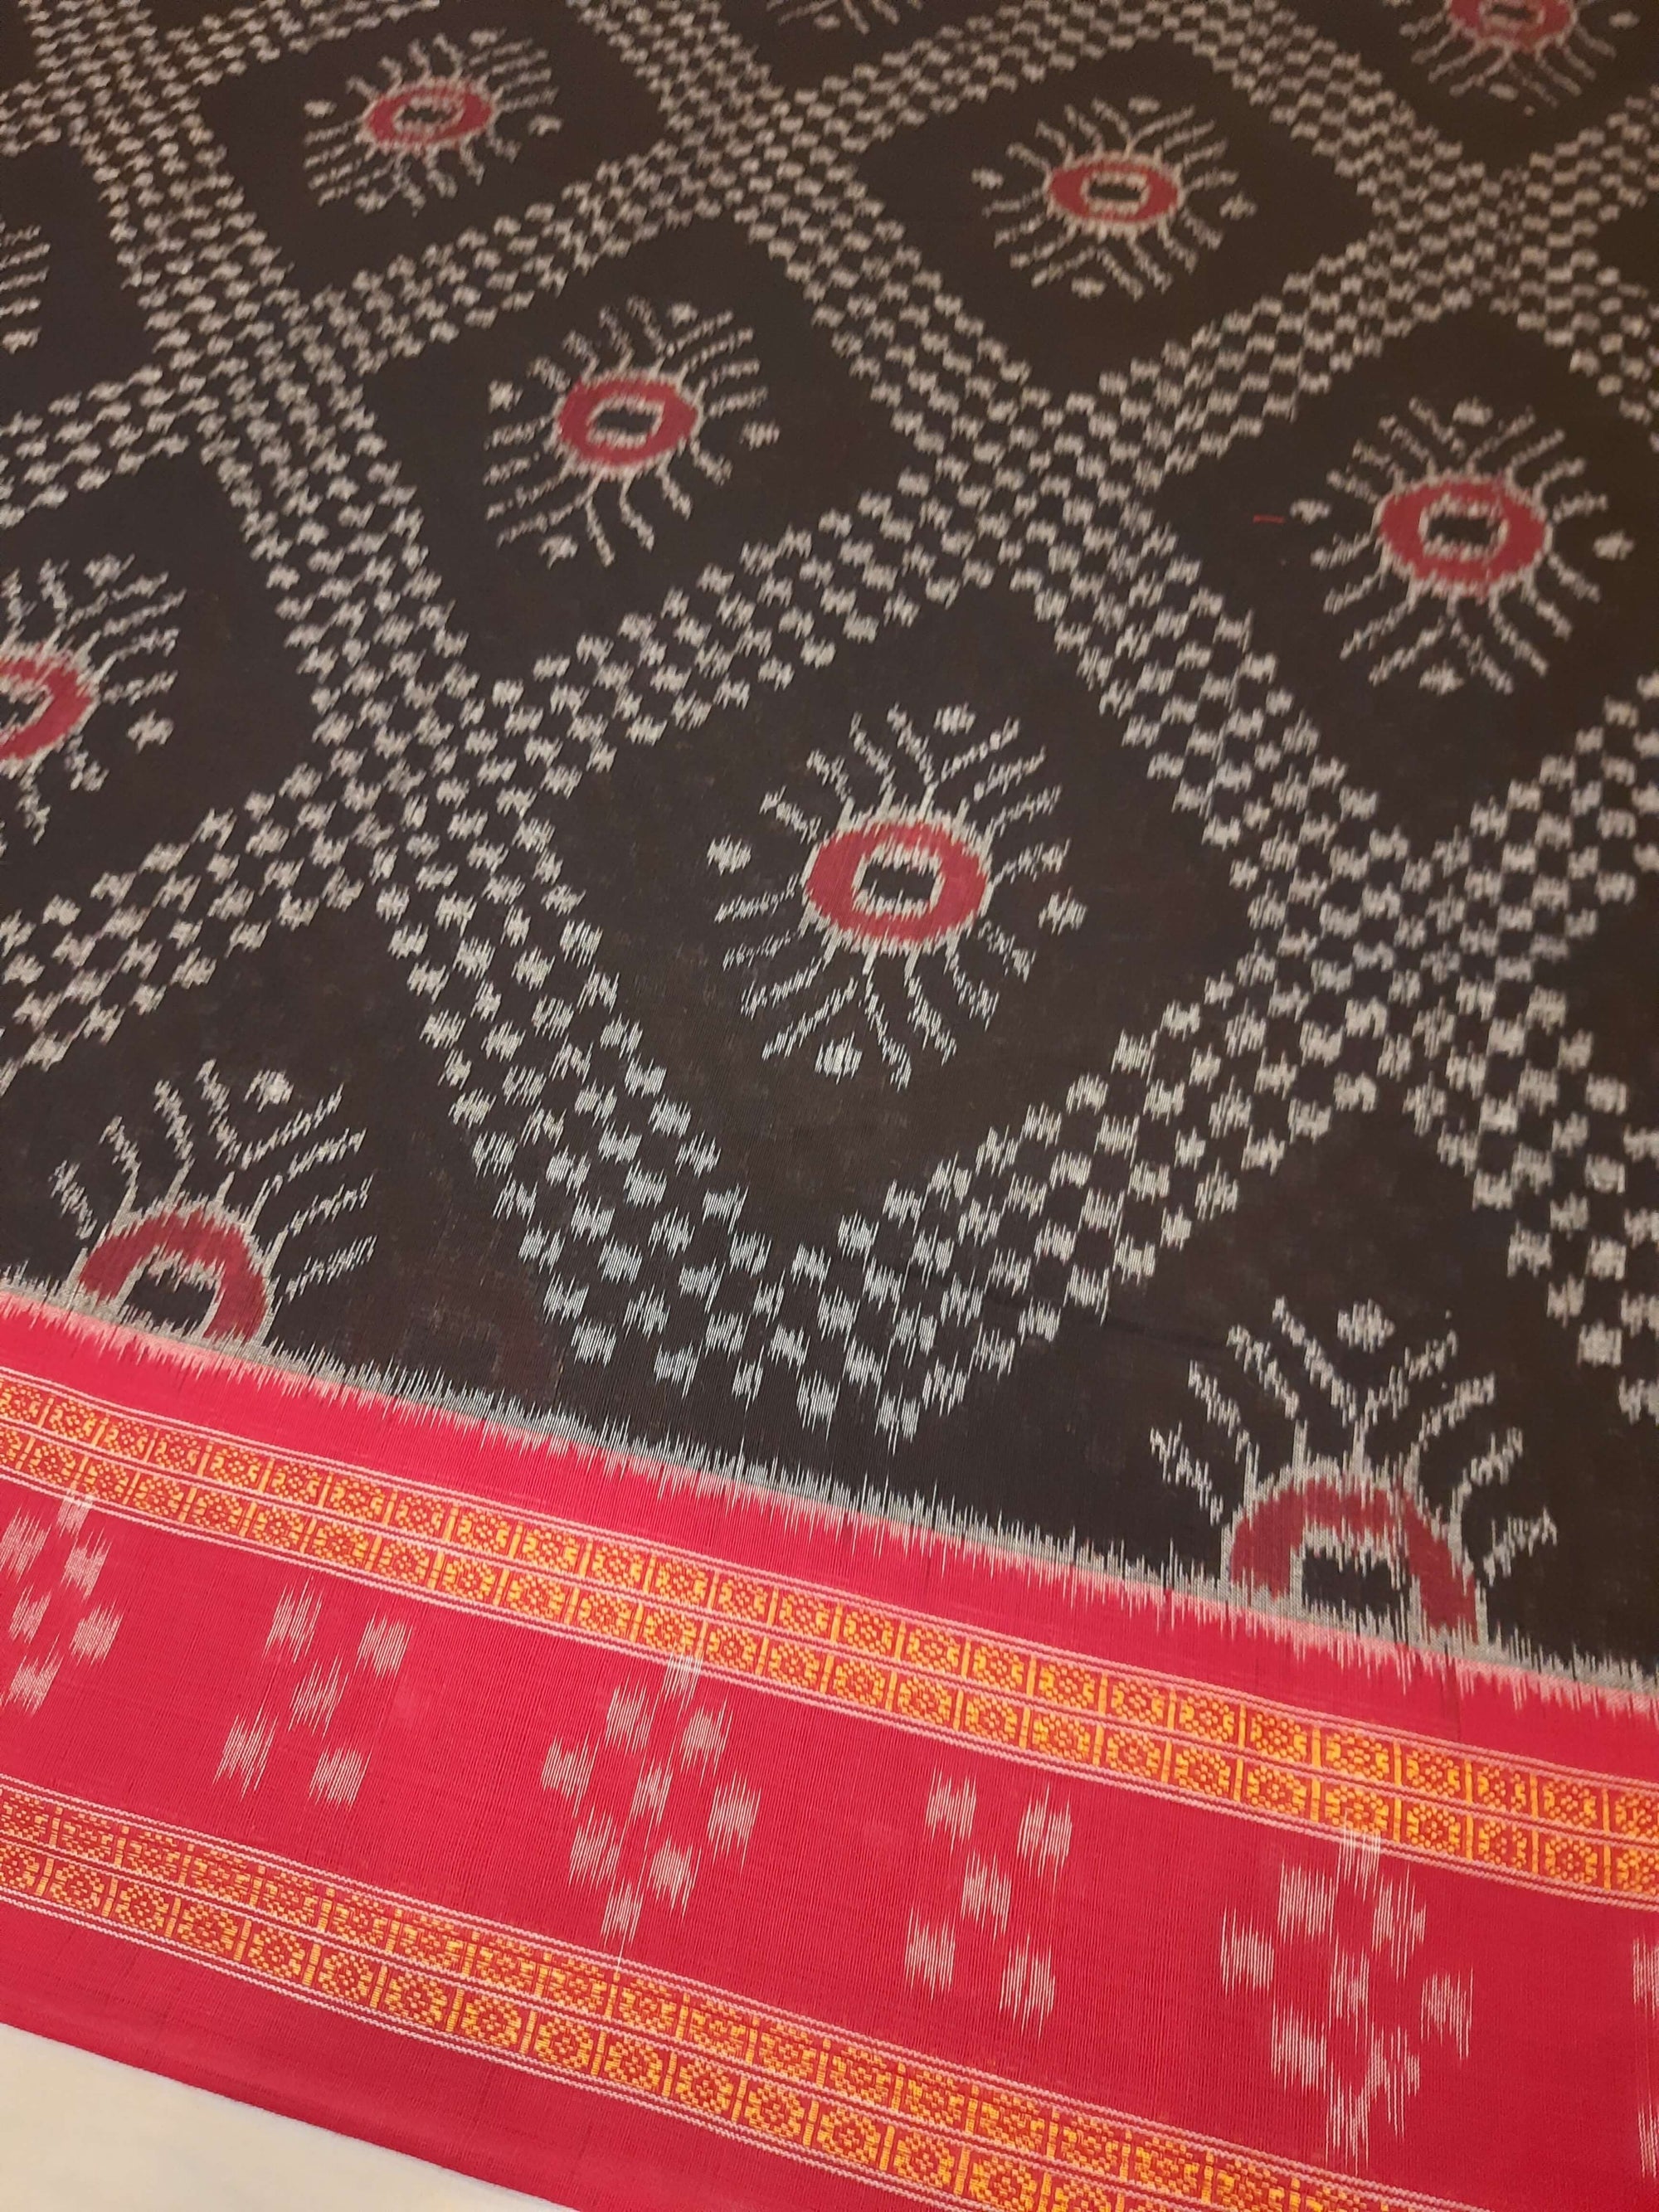 Black and red cotton Odisha ikat saree with Tarabali pattern and matching blouse piece